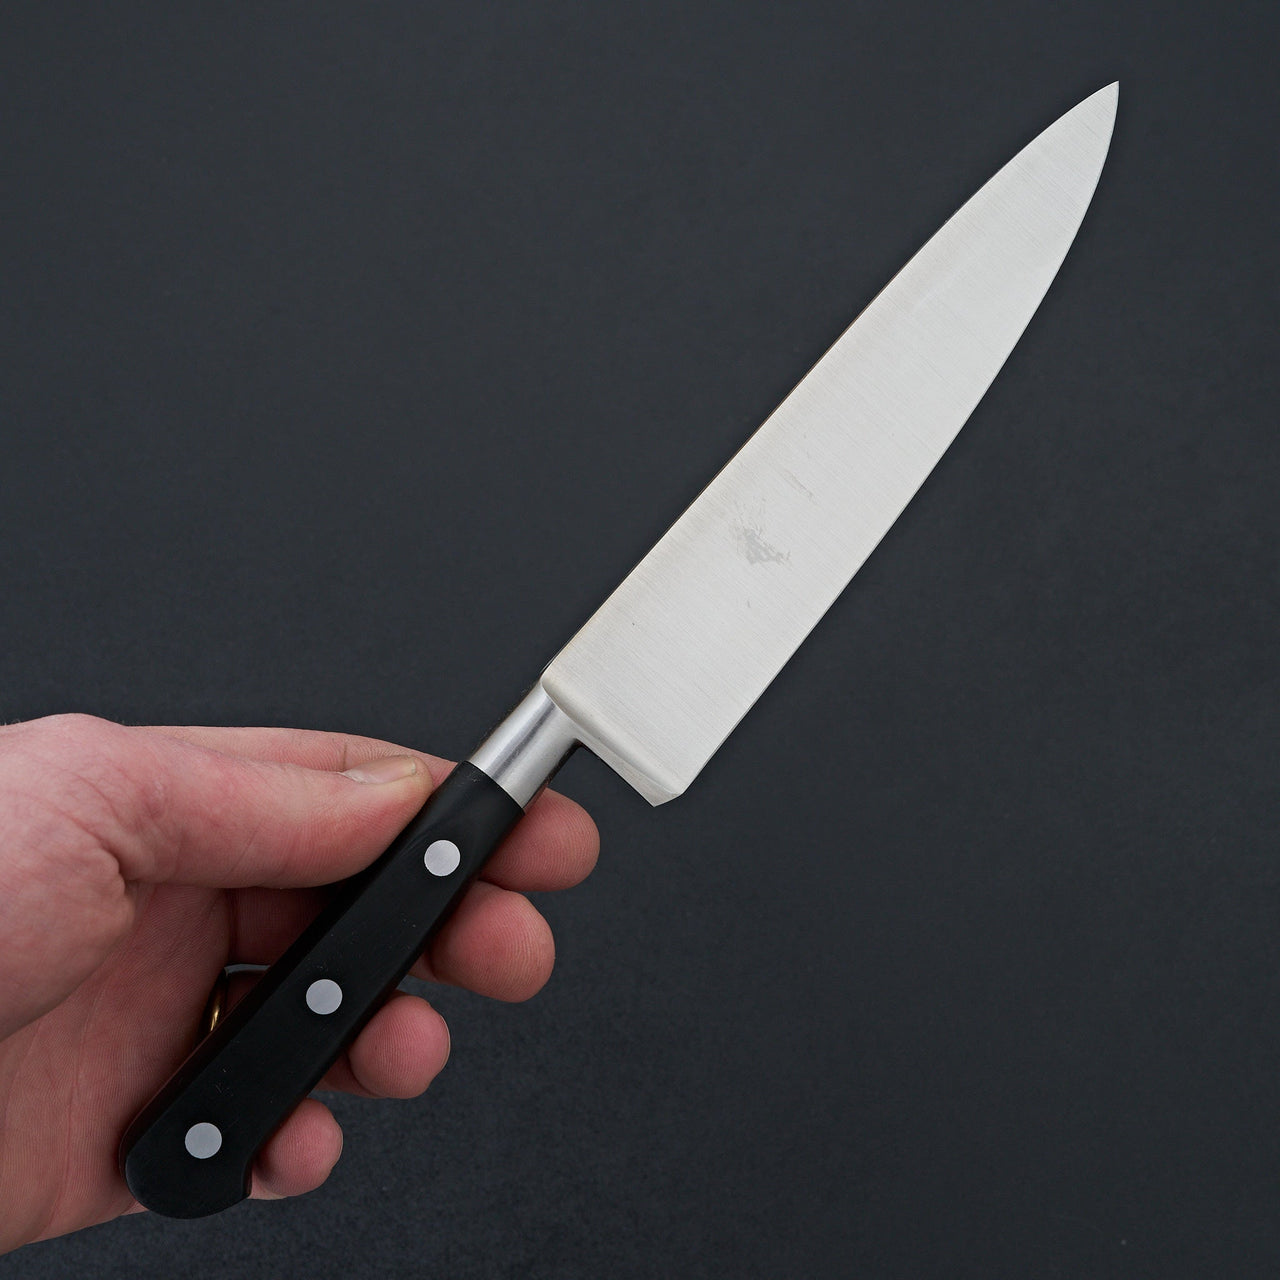 K Sabatier Authentique 6" Chef Stainless-Knife-K Sabatier-Carbon Knife Co